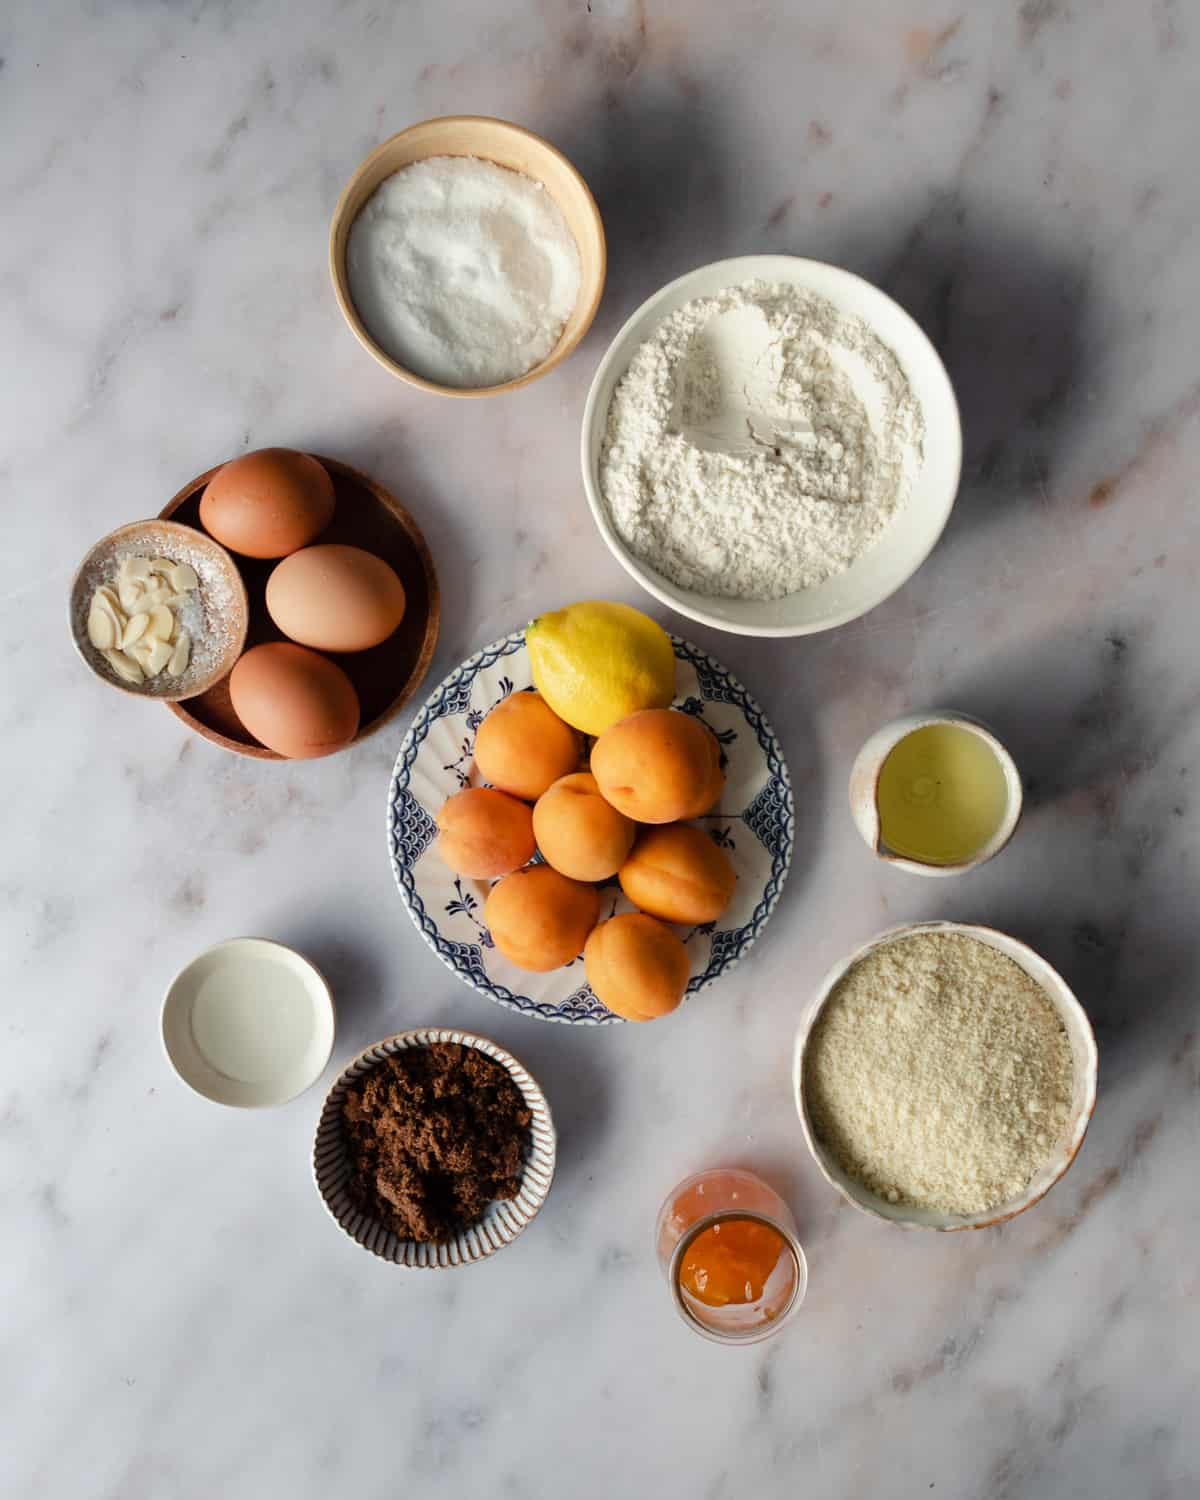 Ingredients on bowls for making  Italian almond cake recipe.